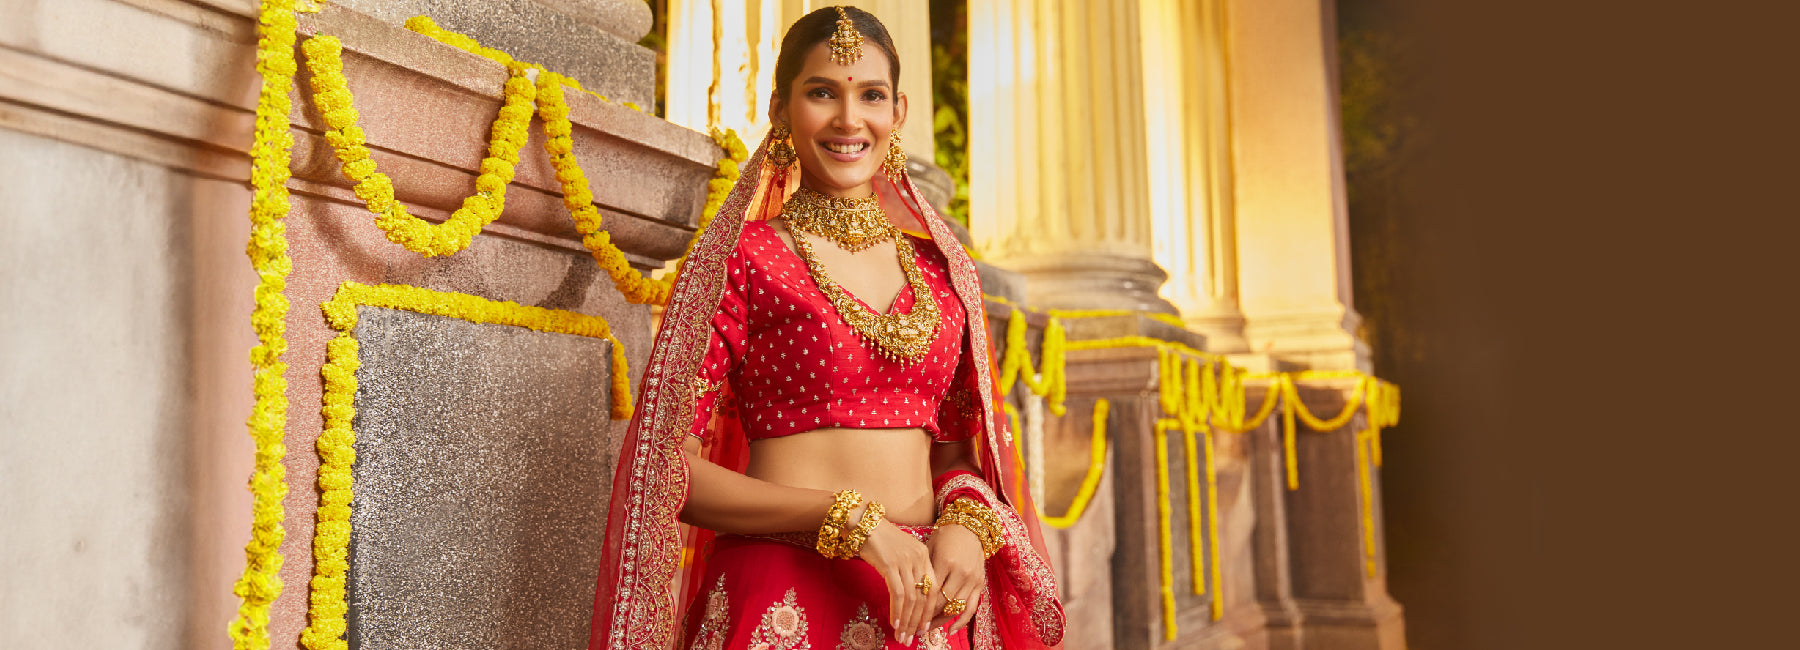 Tarinika's Guide to Selecting the Perfect Indian Wedding Jewelry